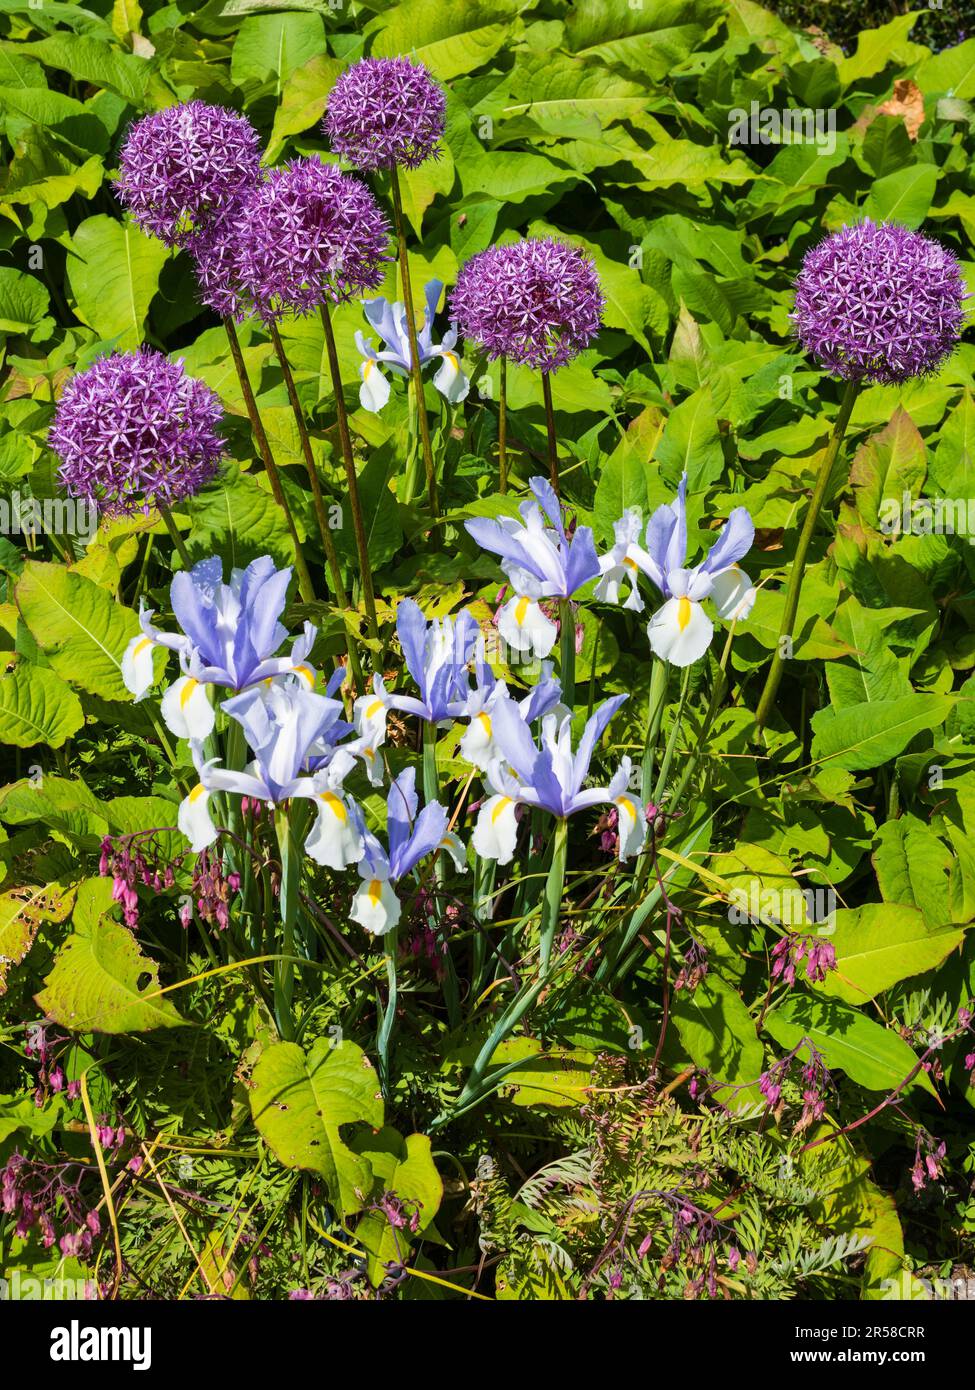 Plantación de combinación de principios de verano de bulbos resistentes Allium 'Purple Sensation' e Iris x hollandica 'Silvery Beauty' Foto de stock